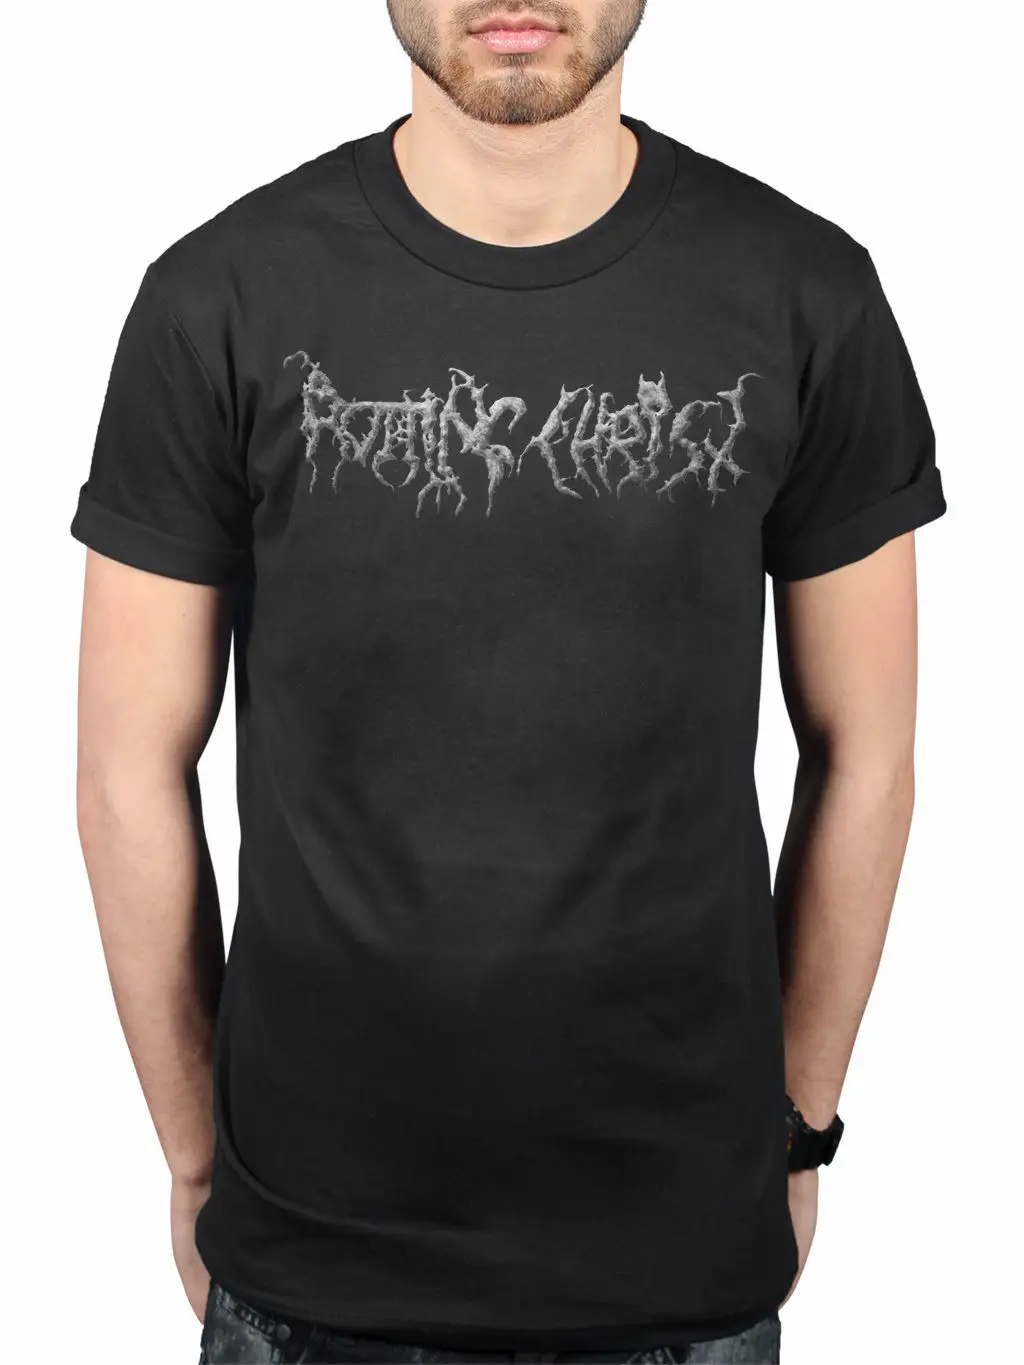 

Official Rotting Christ Kata Ton Daimona Eaytoy T-Shirt Metal Band Sakis Tolis